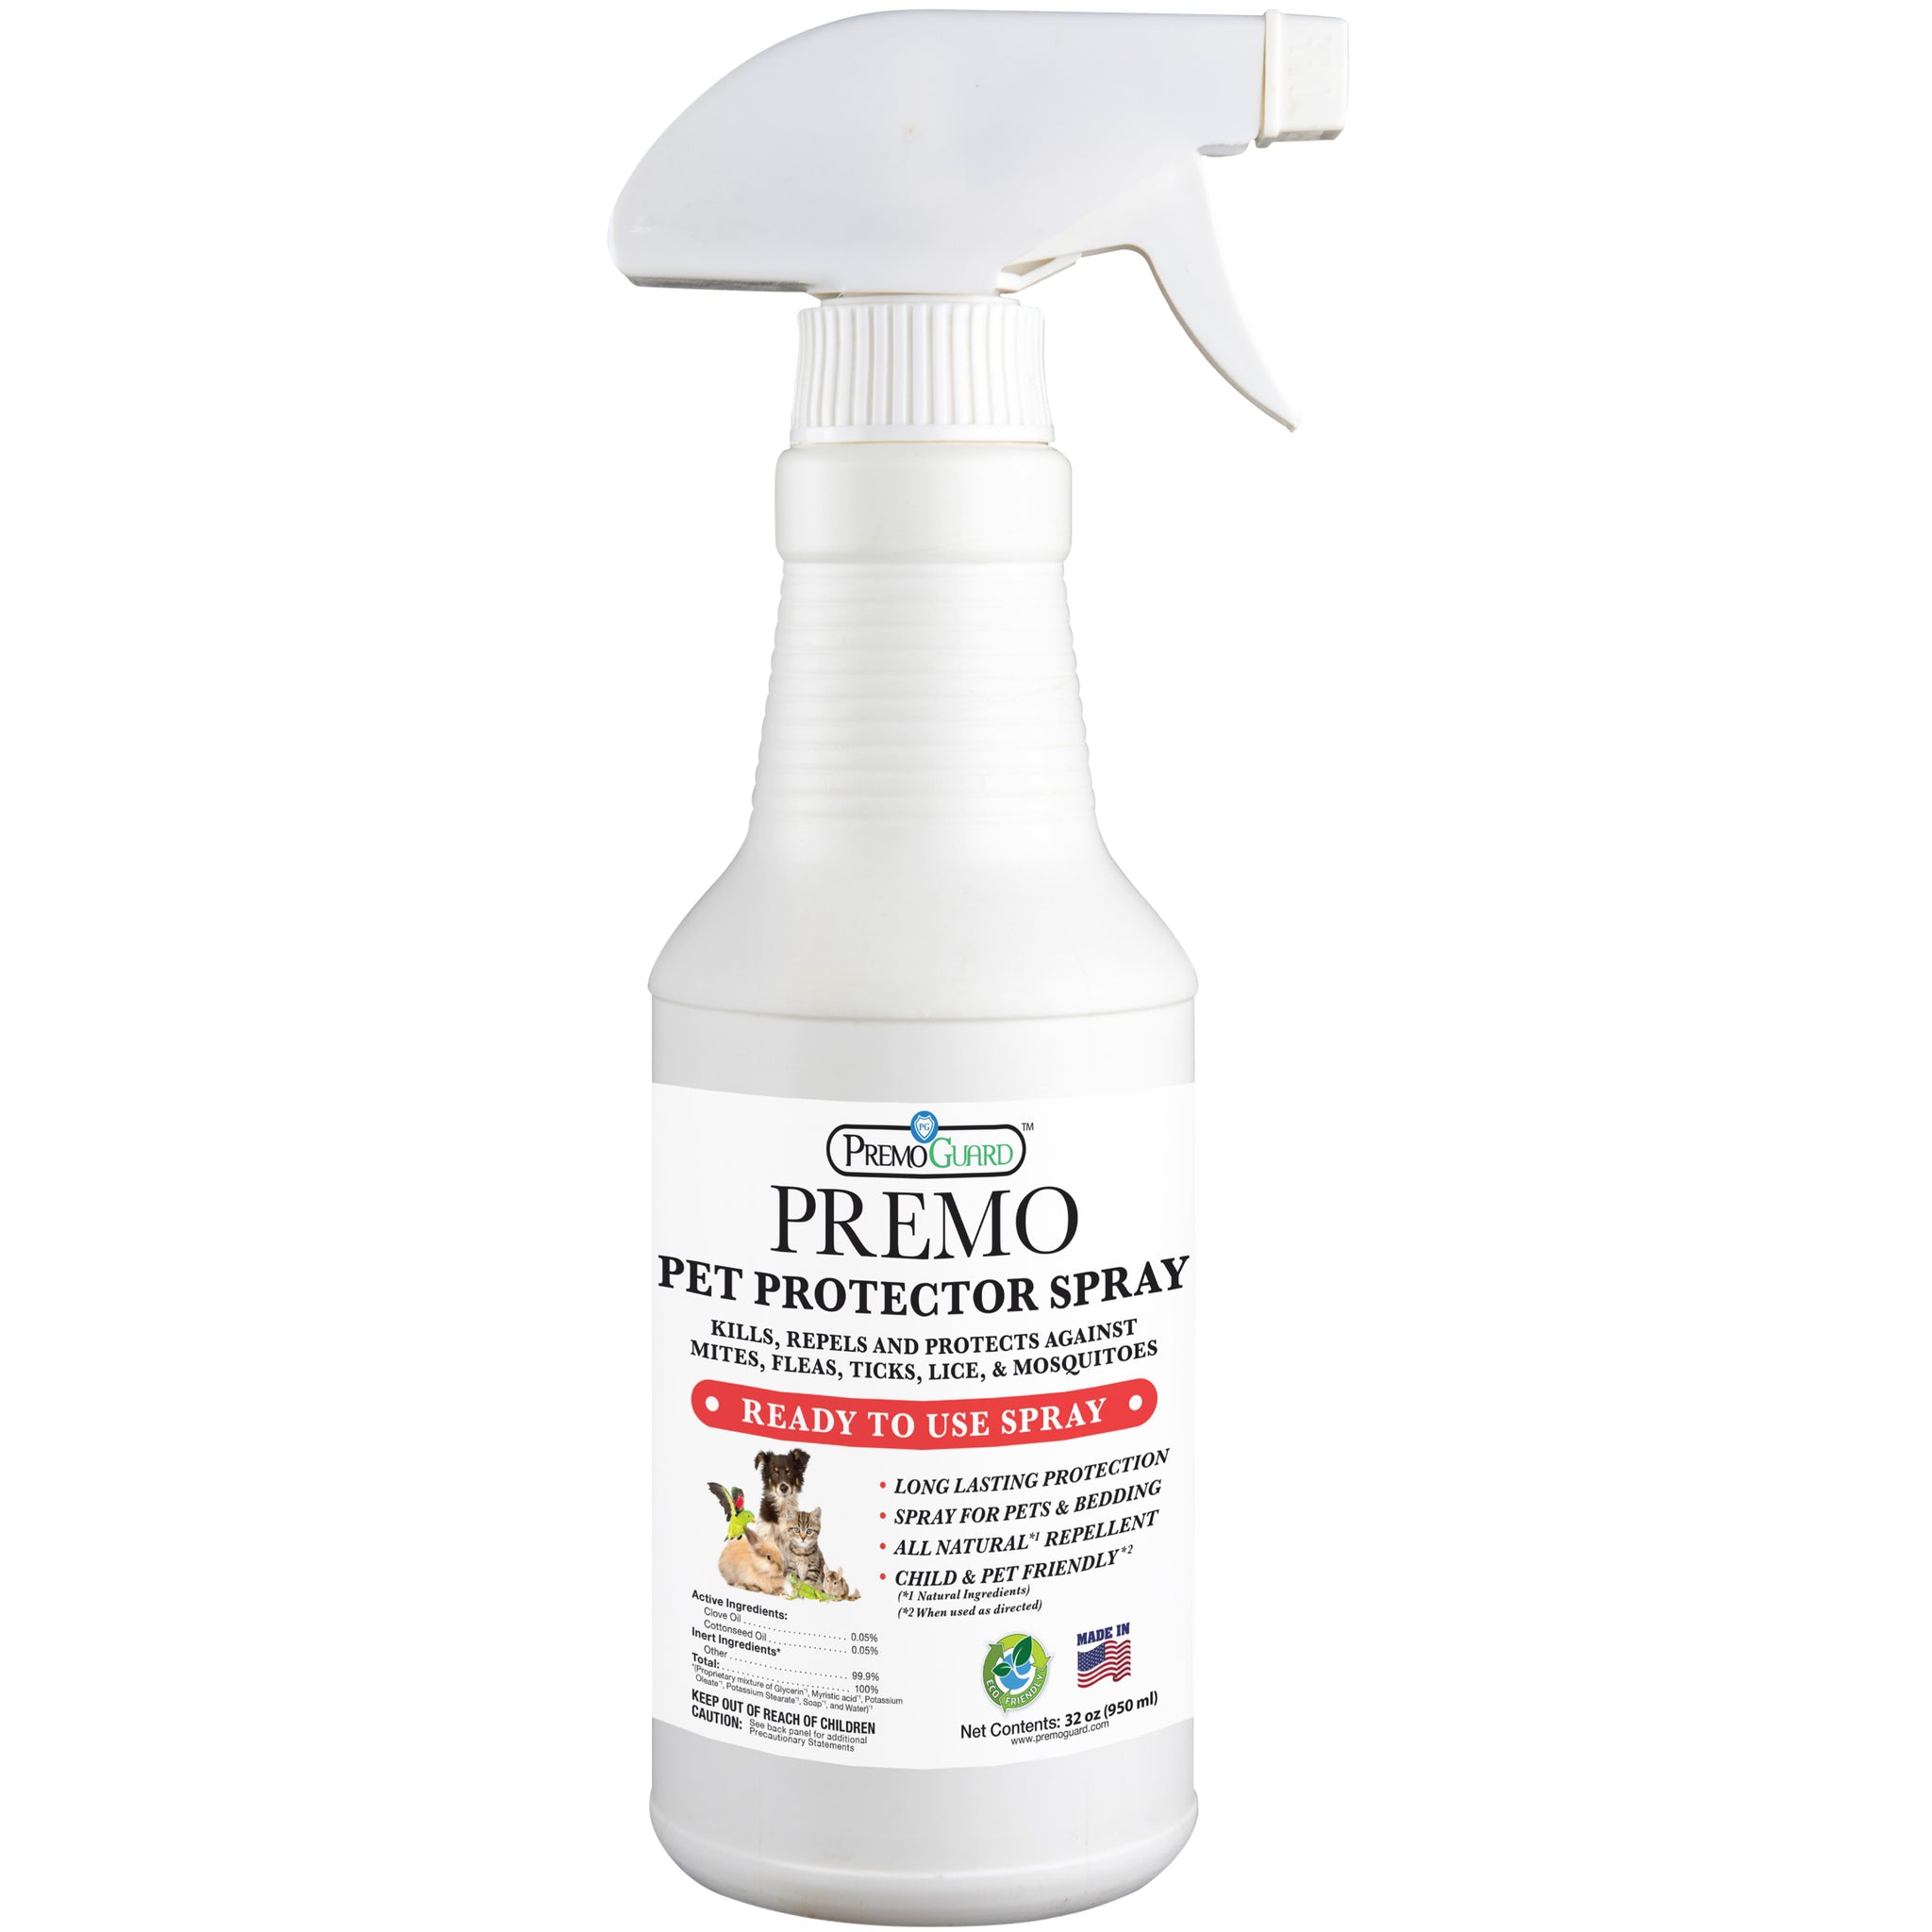 Spray Antimoho Dr. Keddo Schimmelex - Caravaning Gorbea